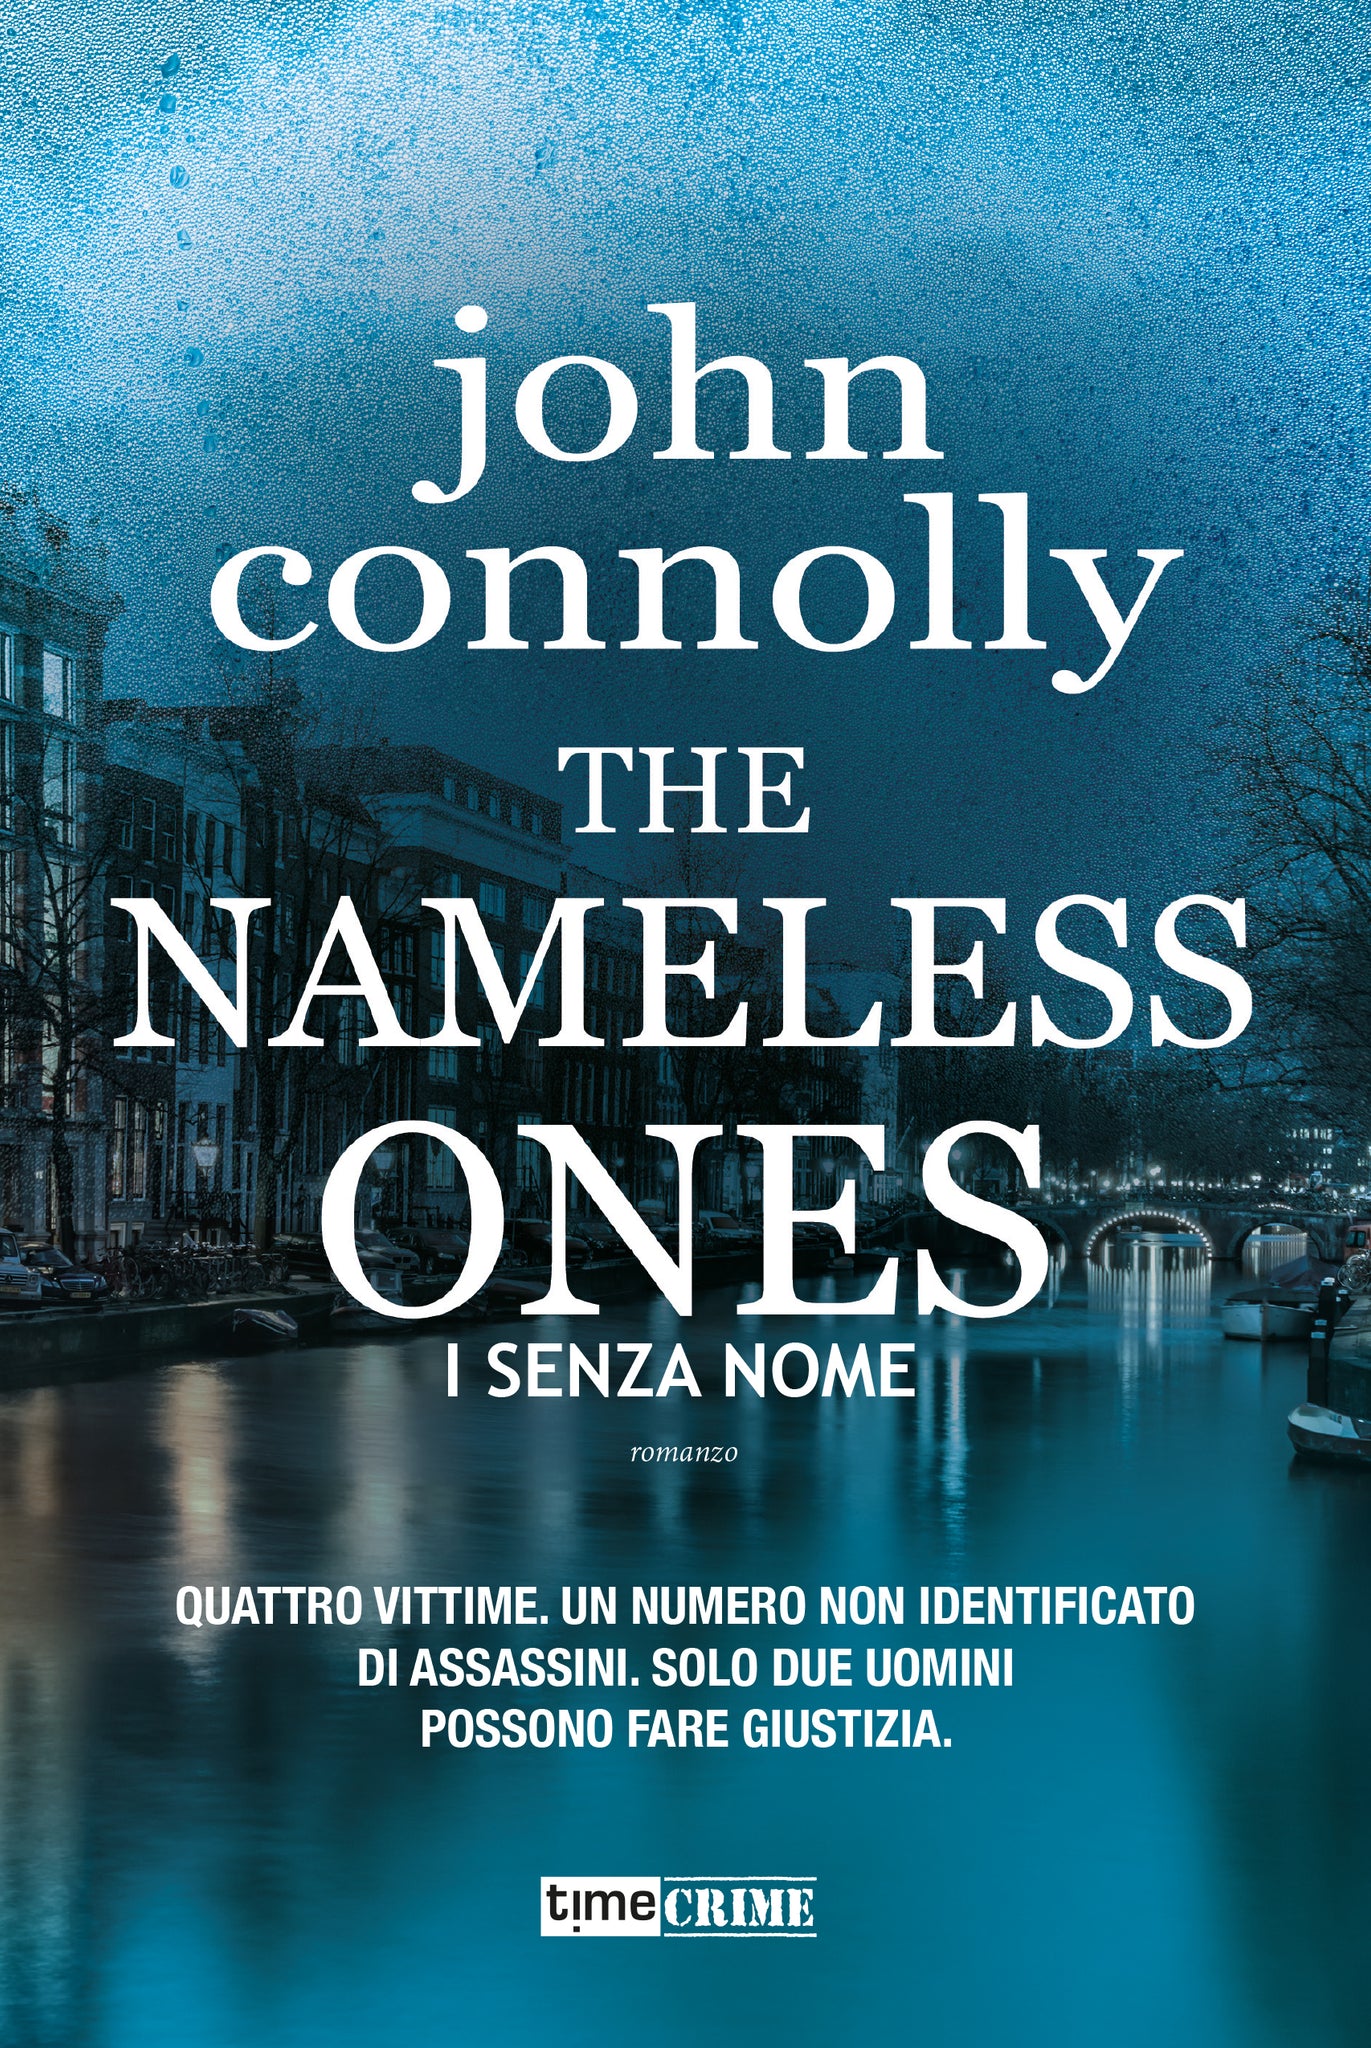 The Nameless Ones – I senza nome